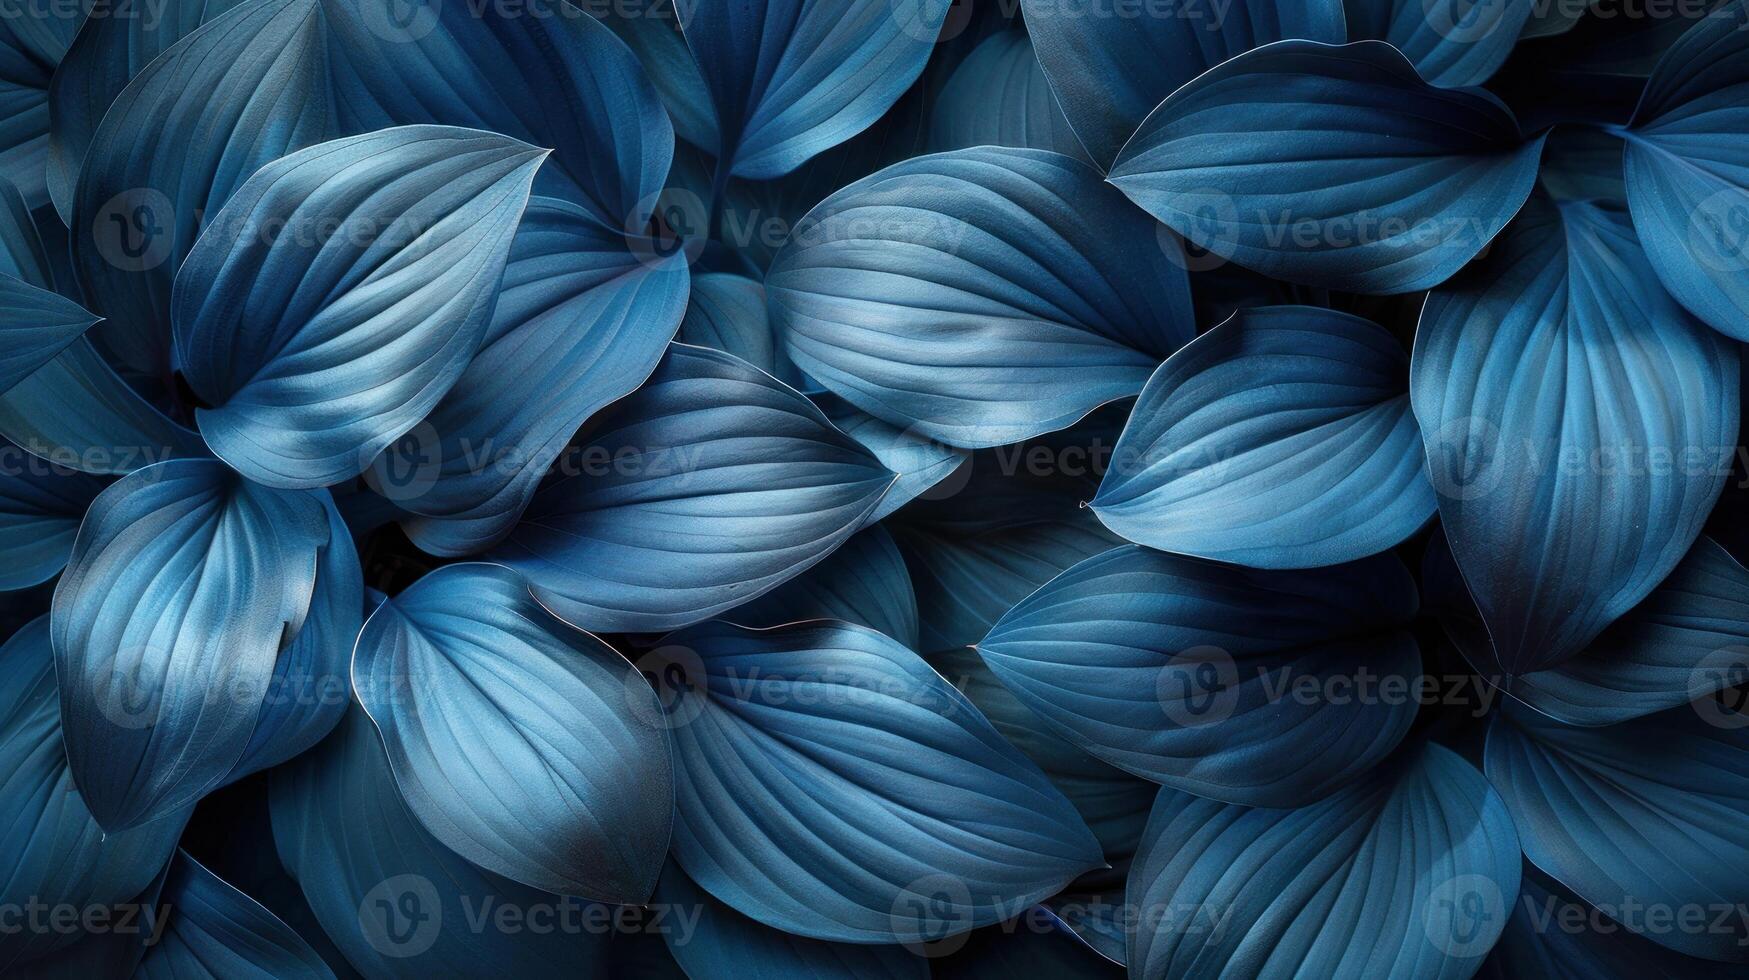 un denso racimo de azul flores agrupado cercanamente juntos foto